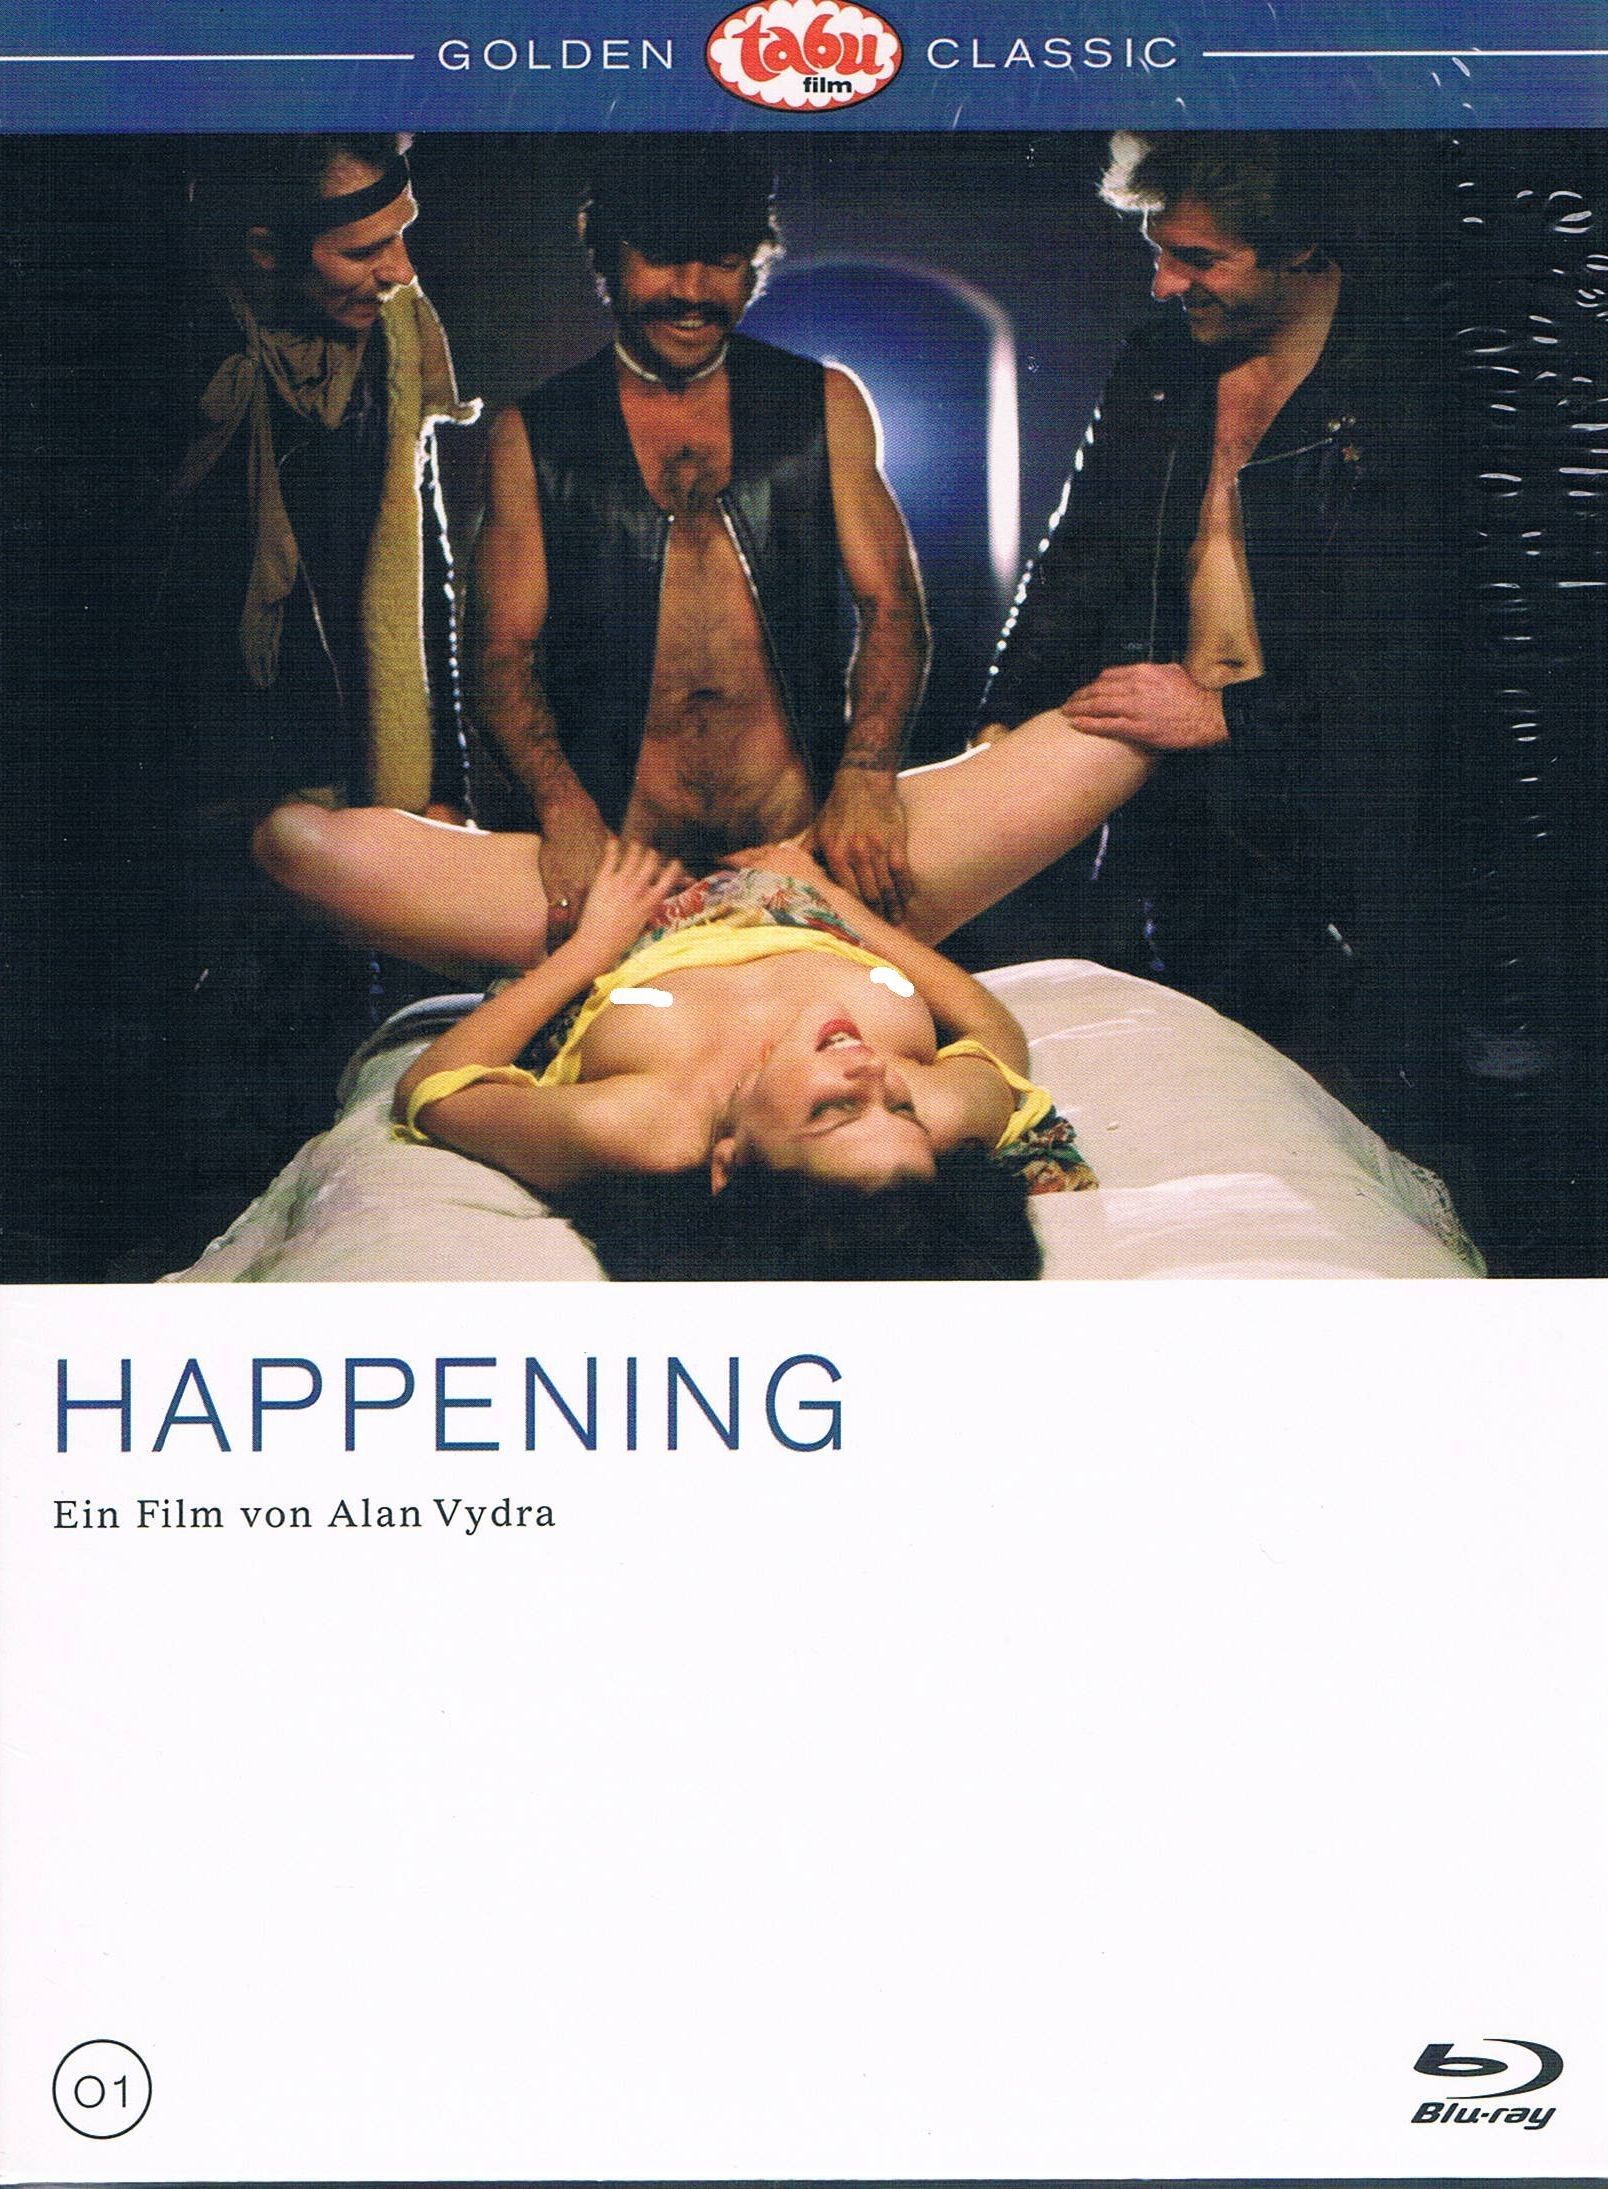 [18+] Happening (1981) English BluRay download full movie